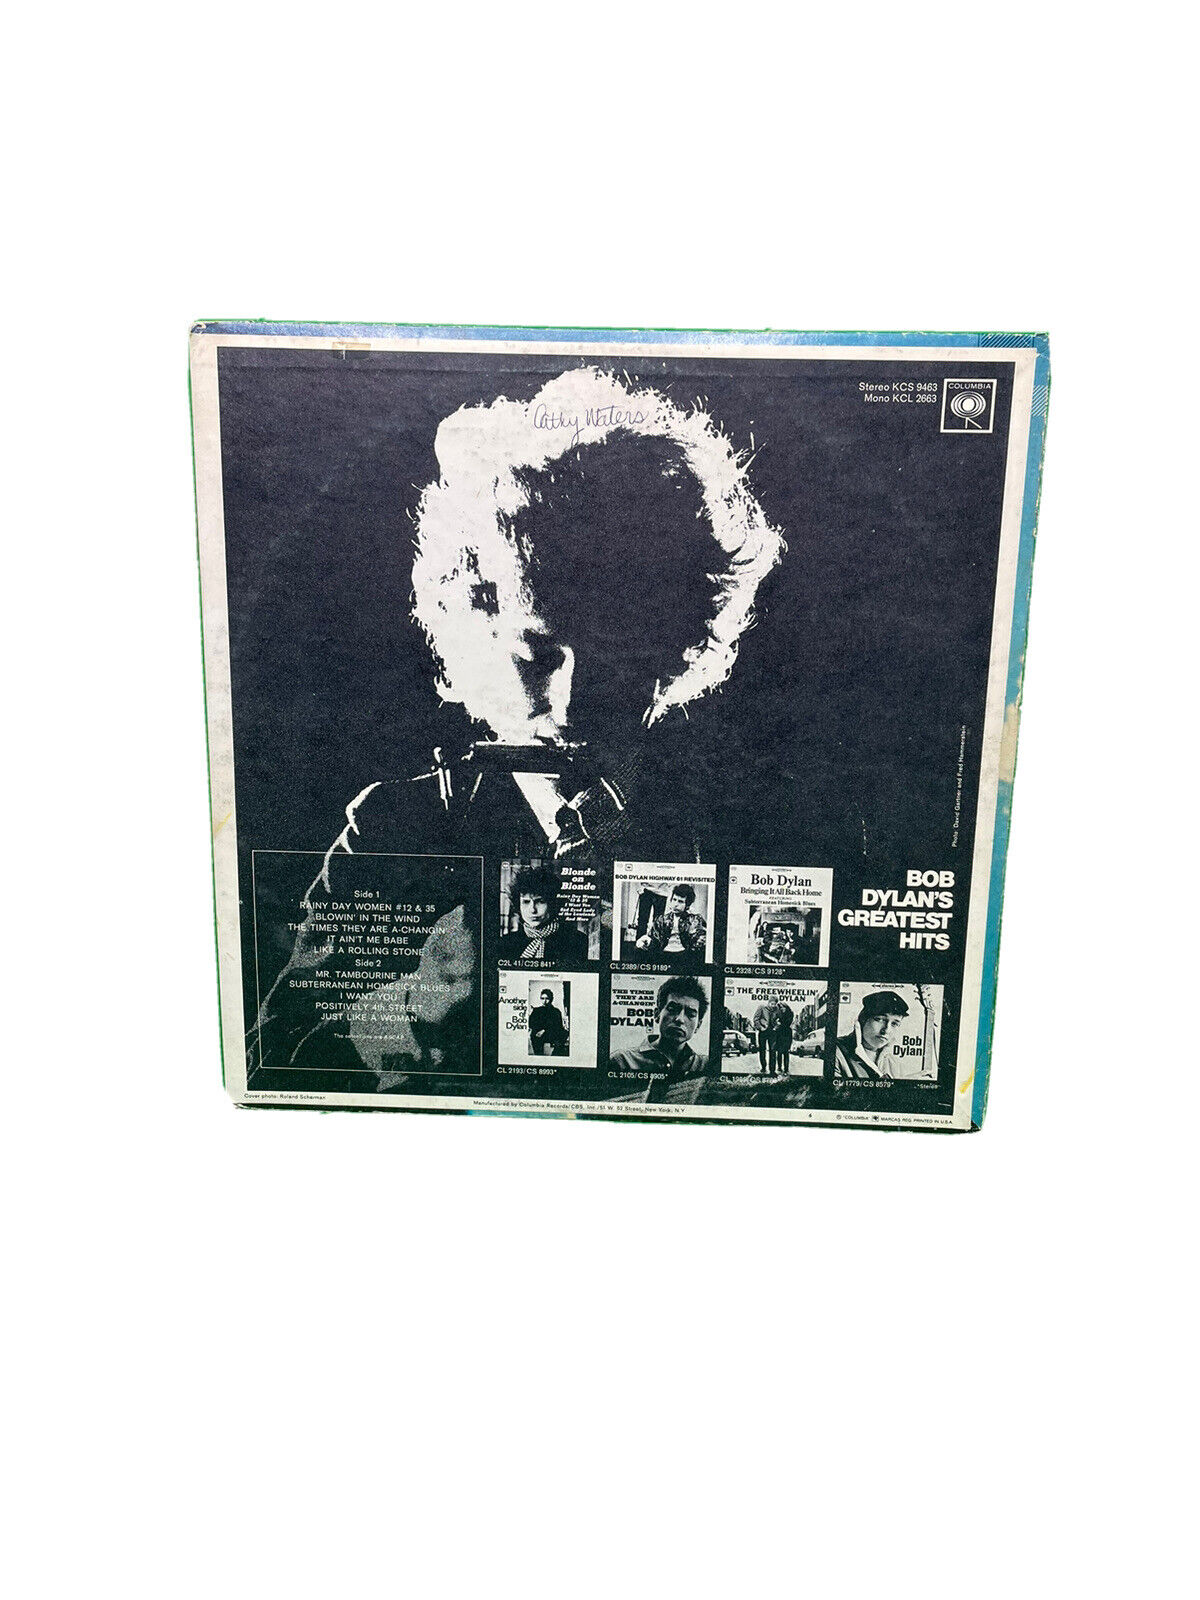 Bob Dylans Greatest Hits Vinyl Record 1967 Columbia JC 9463 LP classic G+ G +